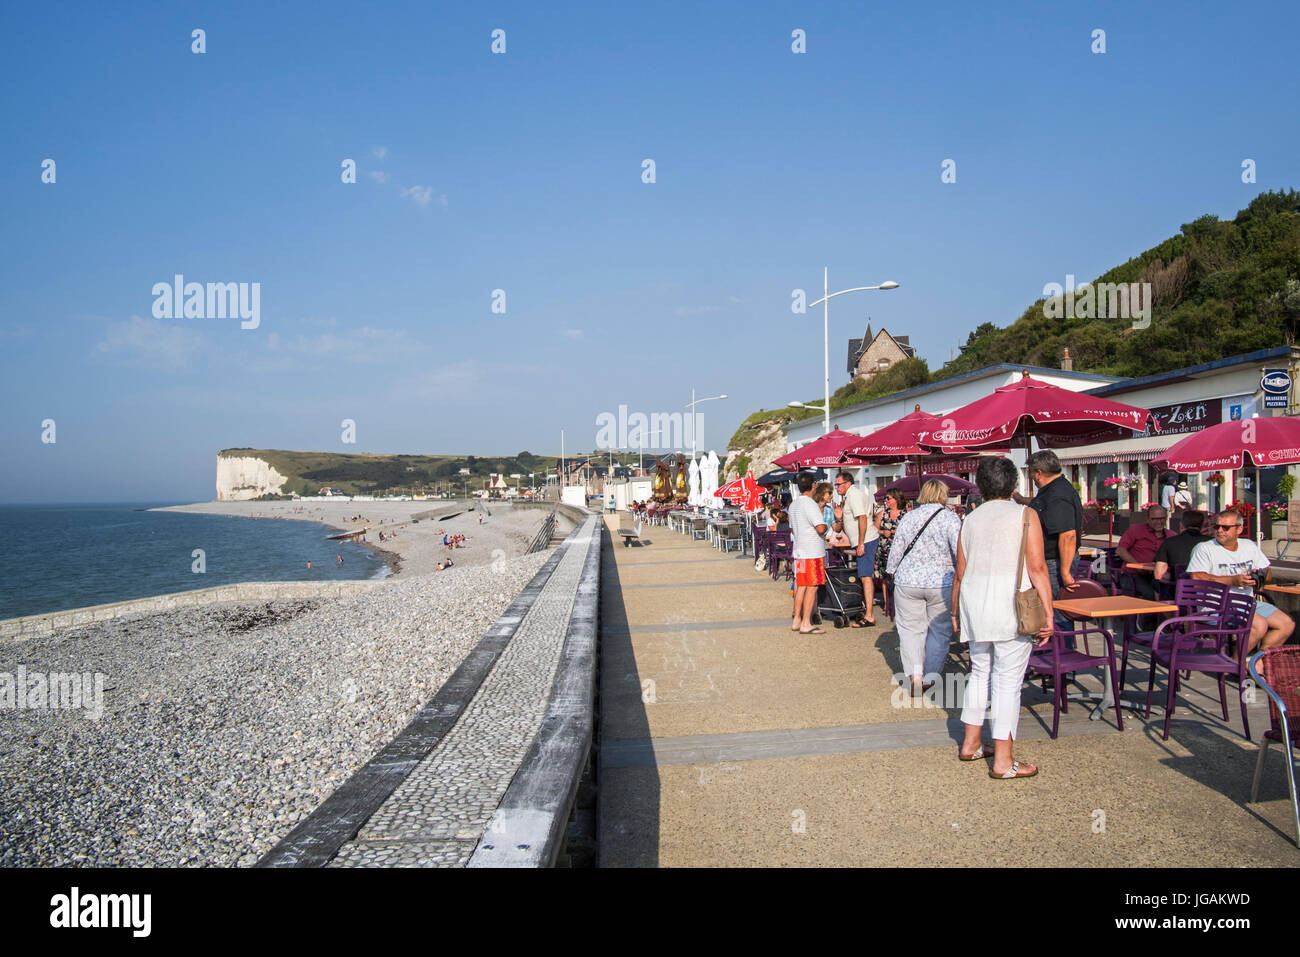 Pebble beach and tourists at pavement café on promenade at Veulettes-sur-Mer, Seine-Maritime, Normandy, France Stock Photo